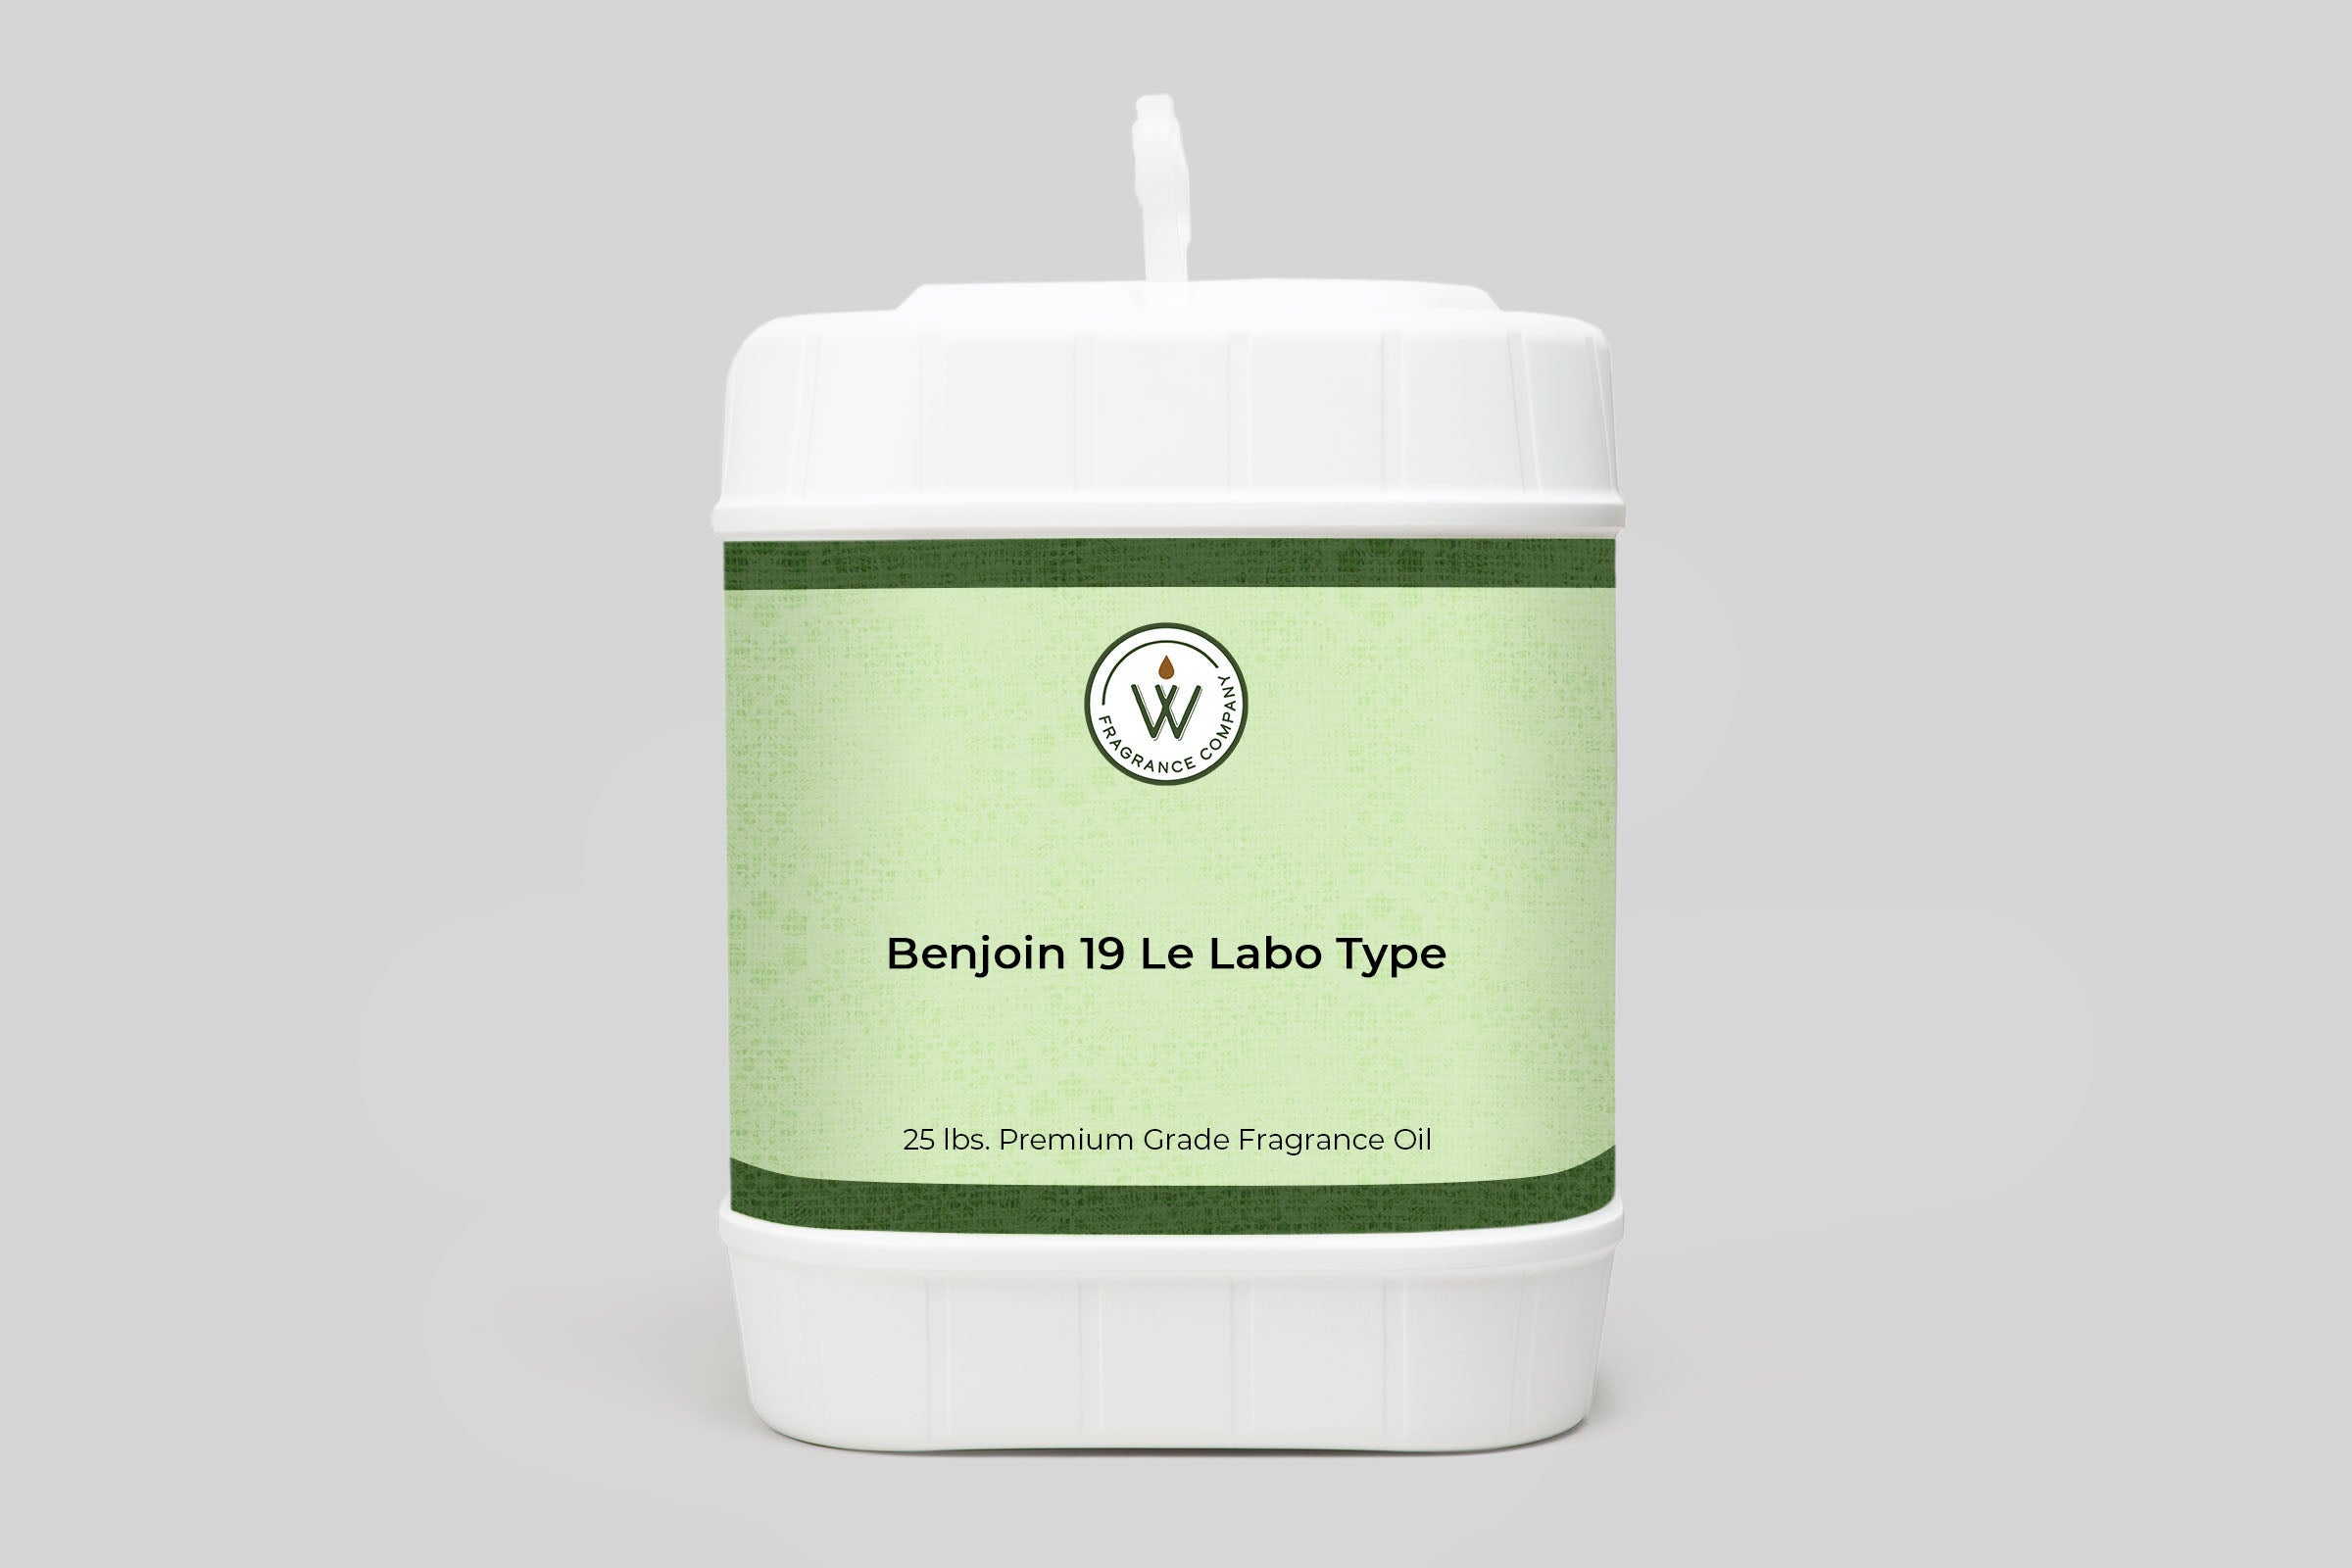 Benjoin 19 Le Labo Type Fragrance Oil